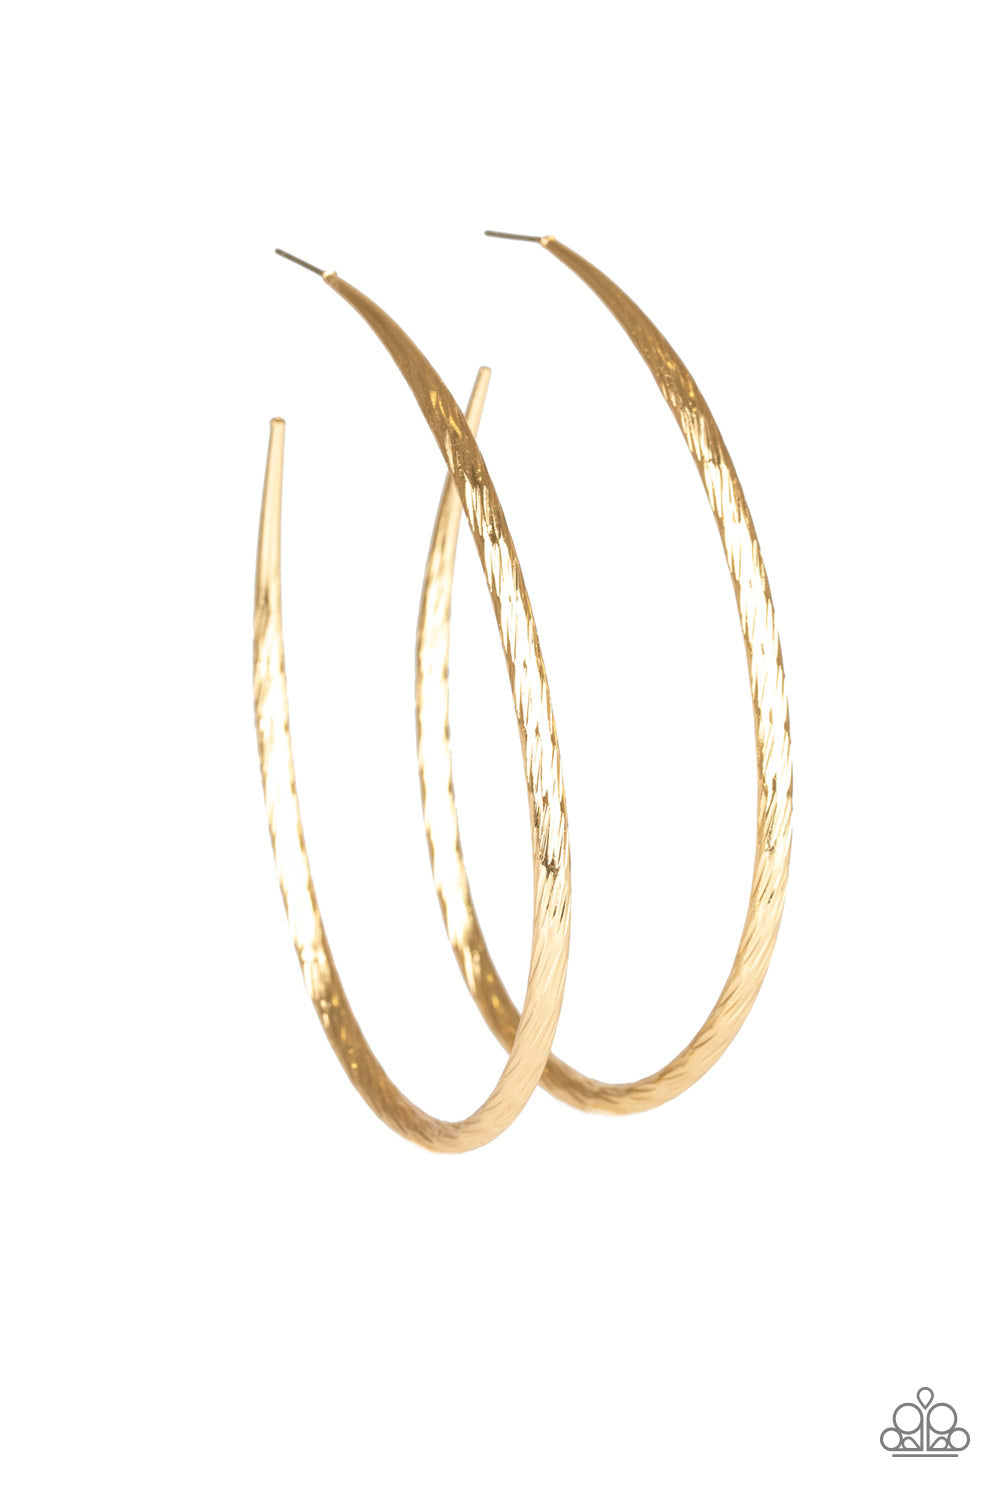 Fleek All Week - Gold Hoop Earrings - Susan's Jewelry Shop